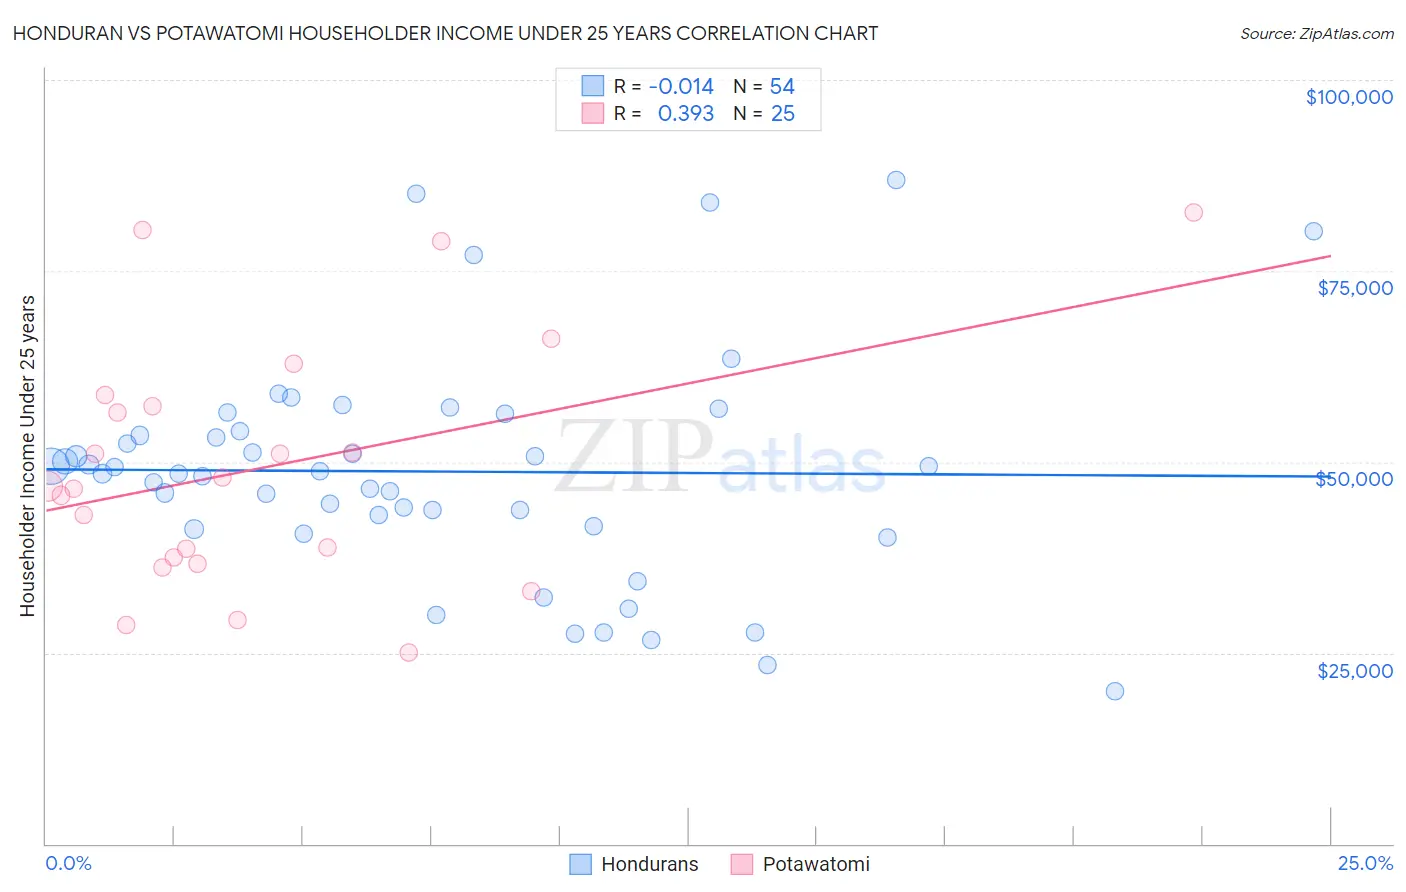 Honduran vs Potawatomi Householder Income Under 25 years